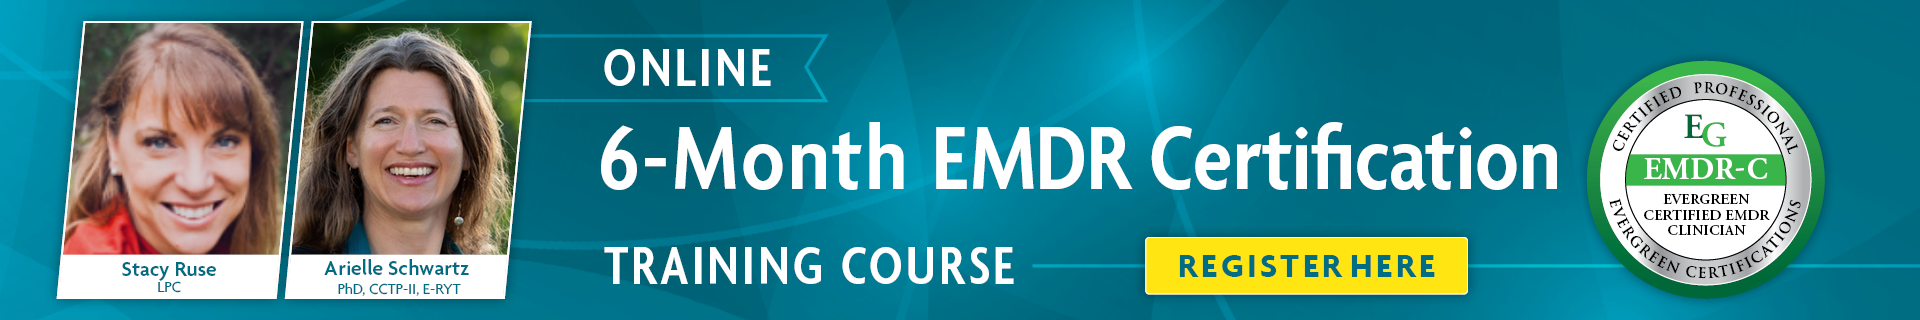 6-Month Online EMDR Certification Course